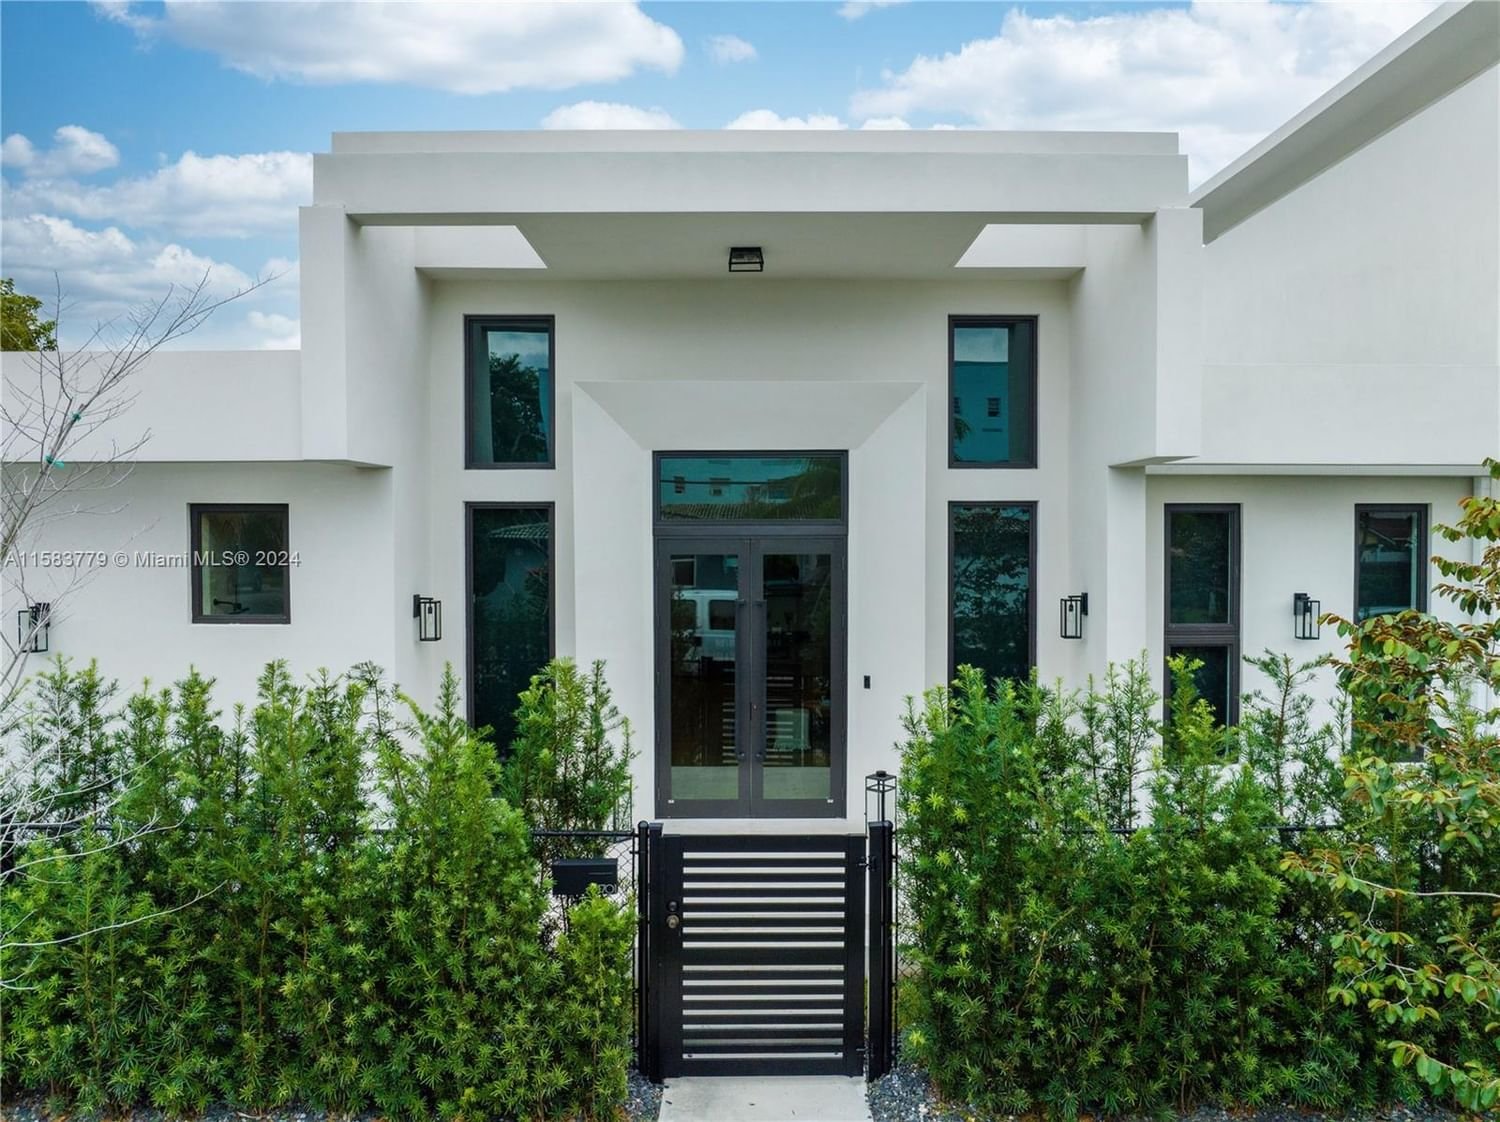 Real estate property located at 1701 23rd Ave, Miami-Dade County, VEDADO, Miami, FL